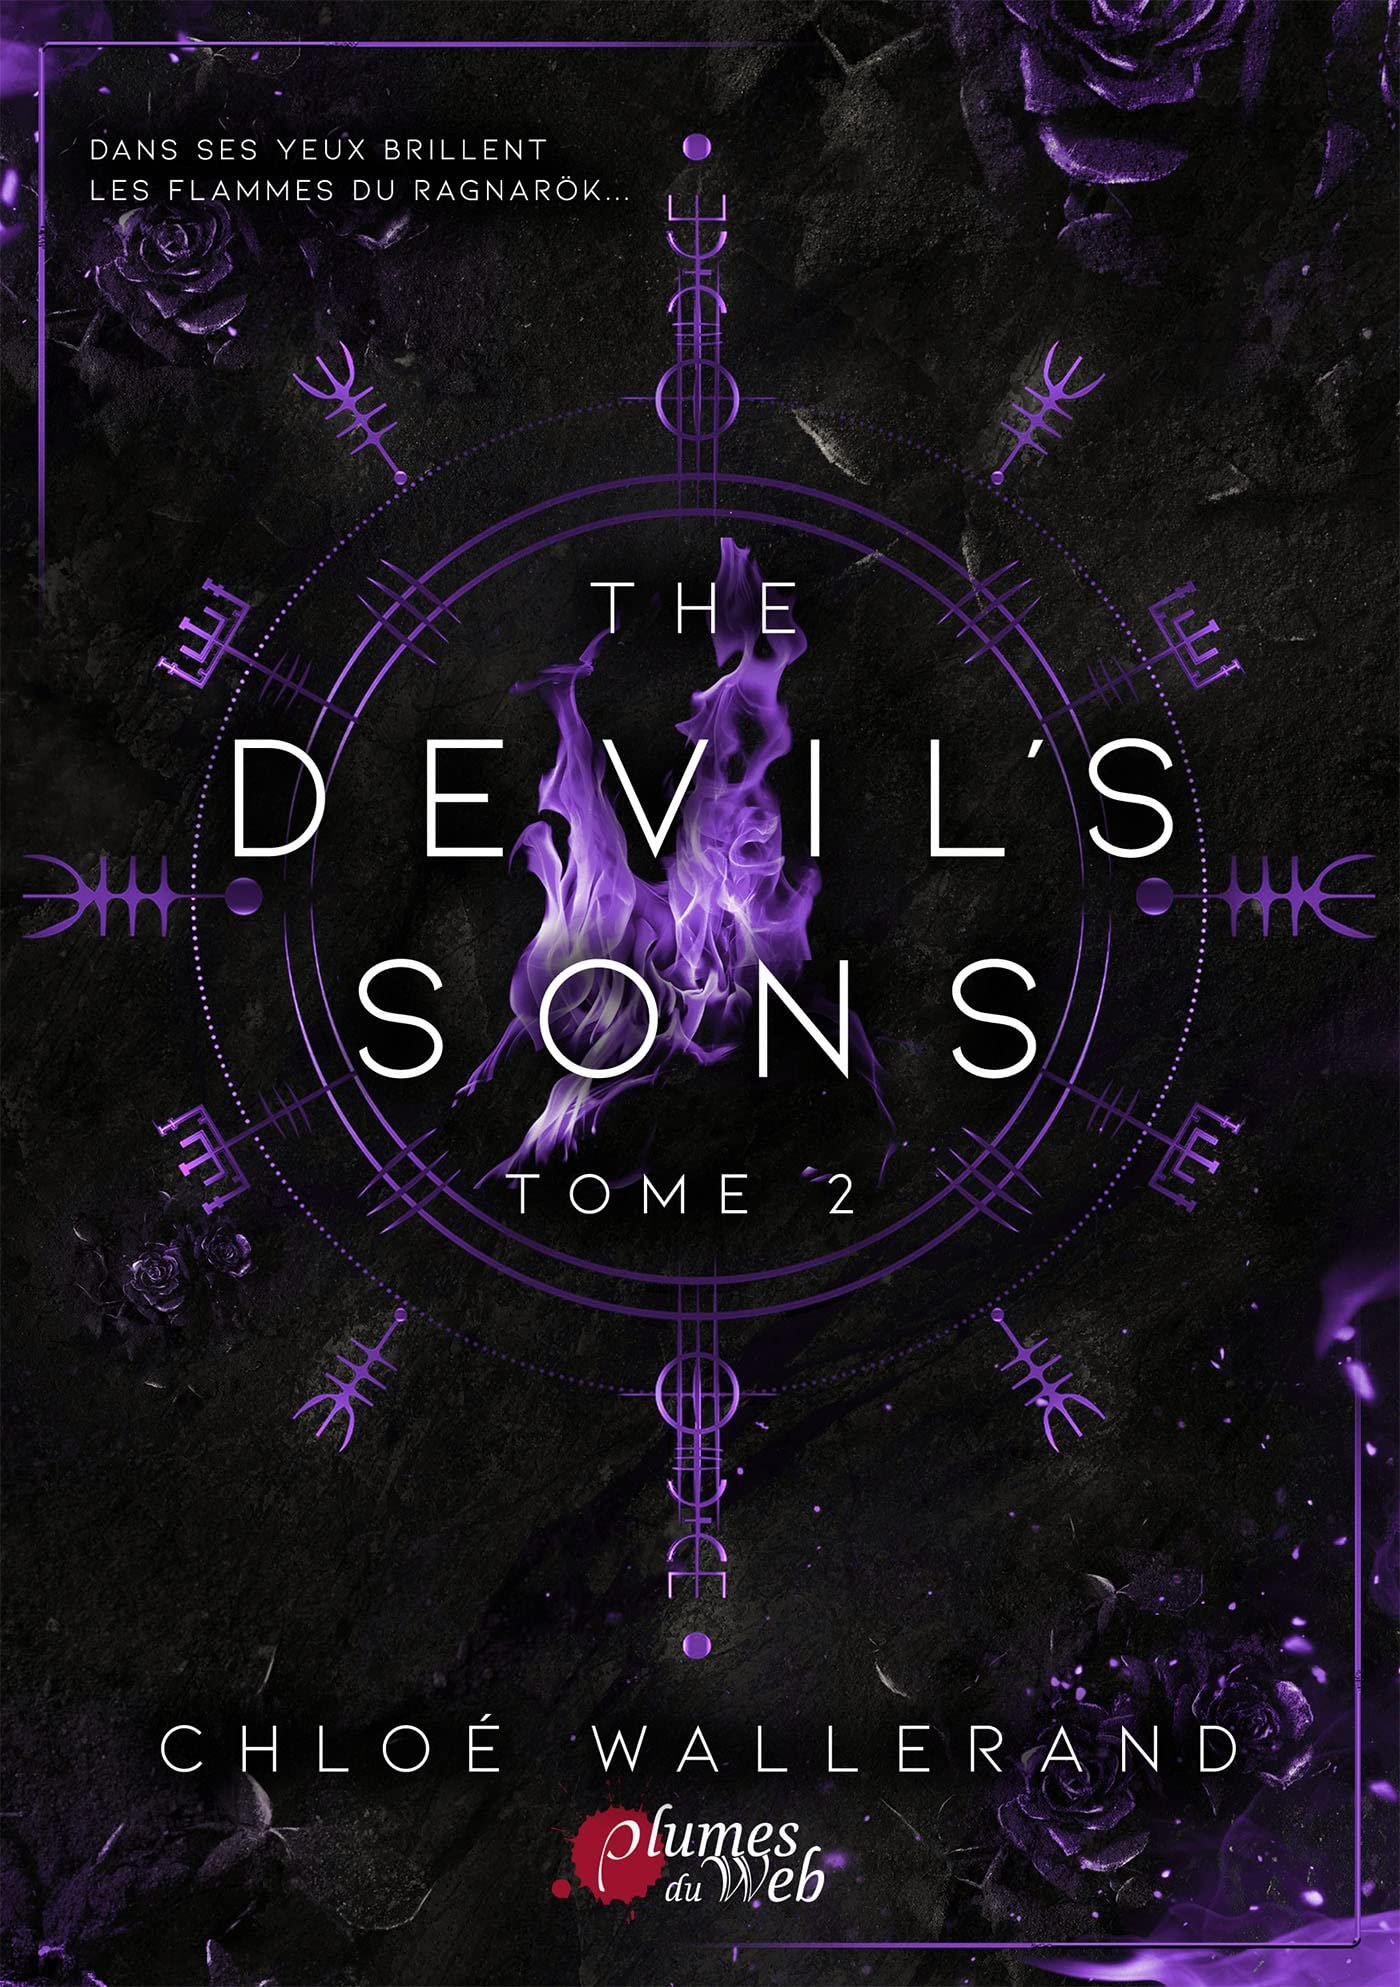 Chloé Wallerand – The Devil's Sons, Tome 2